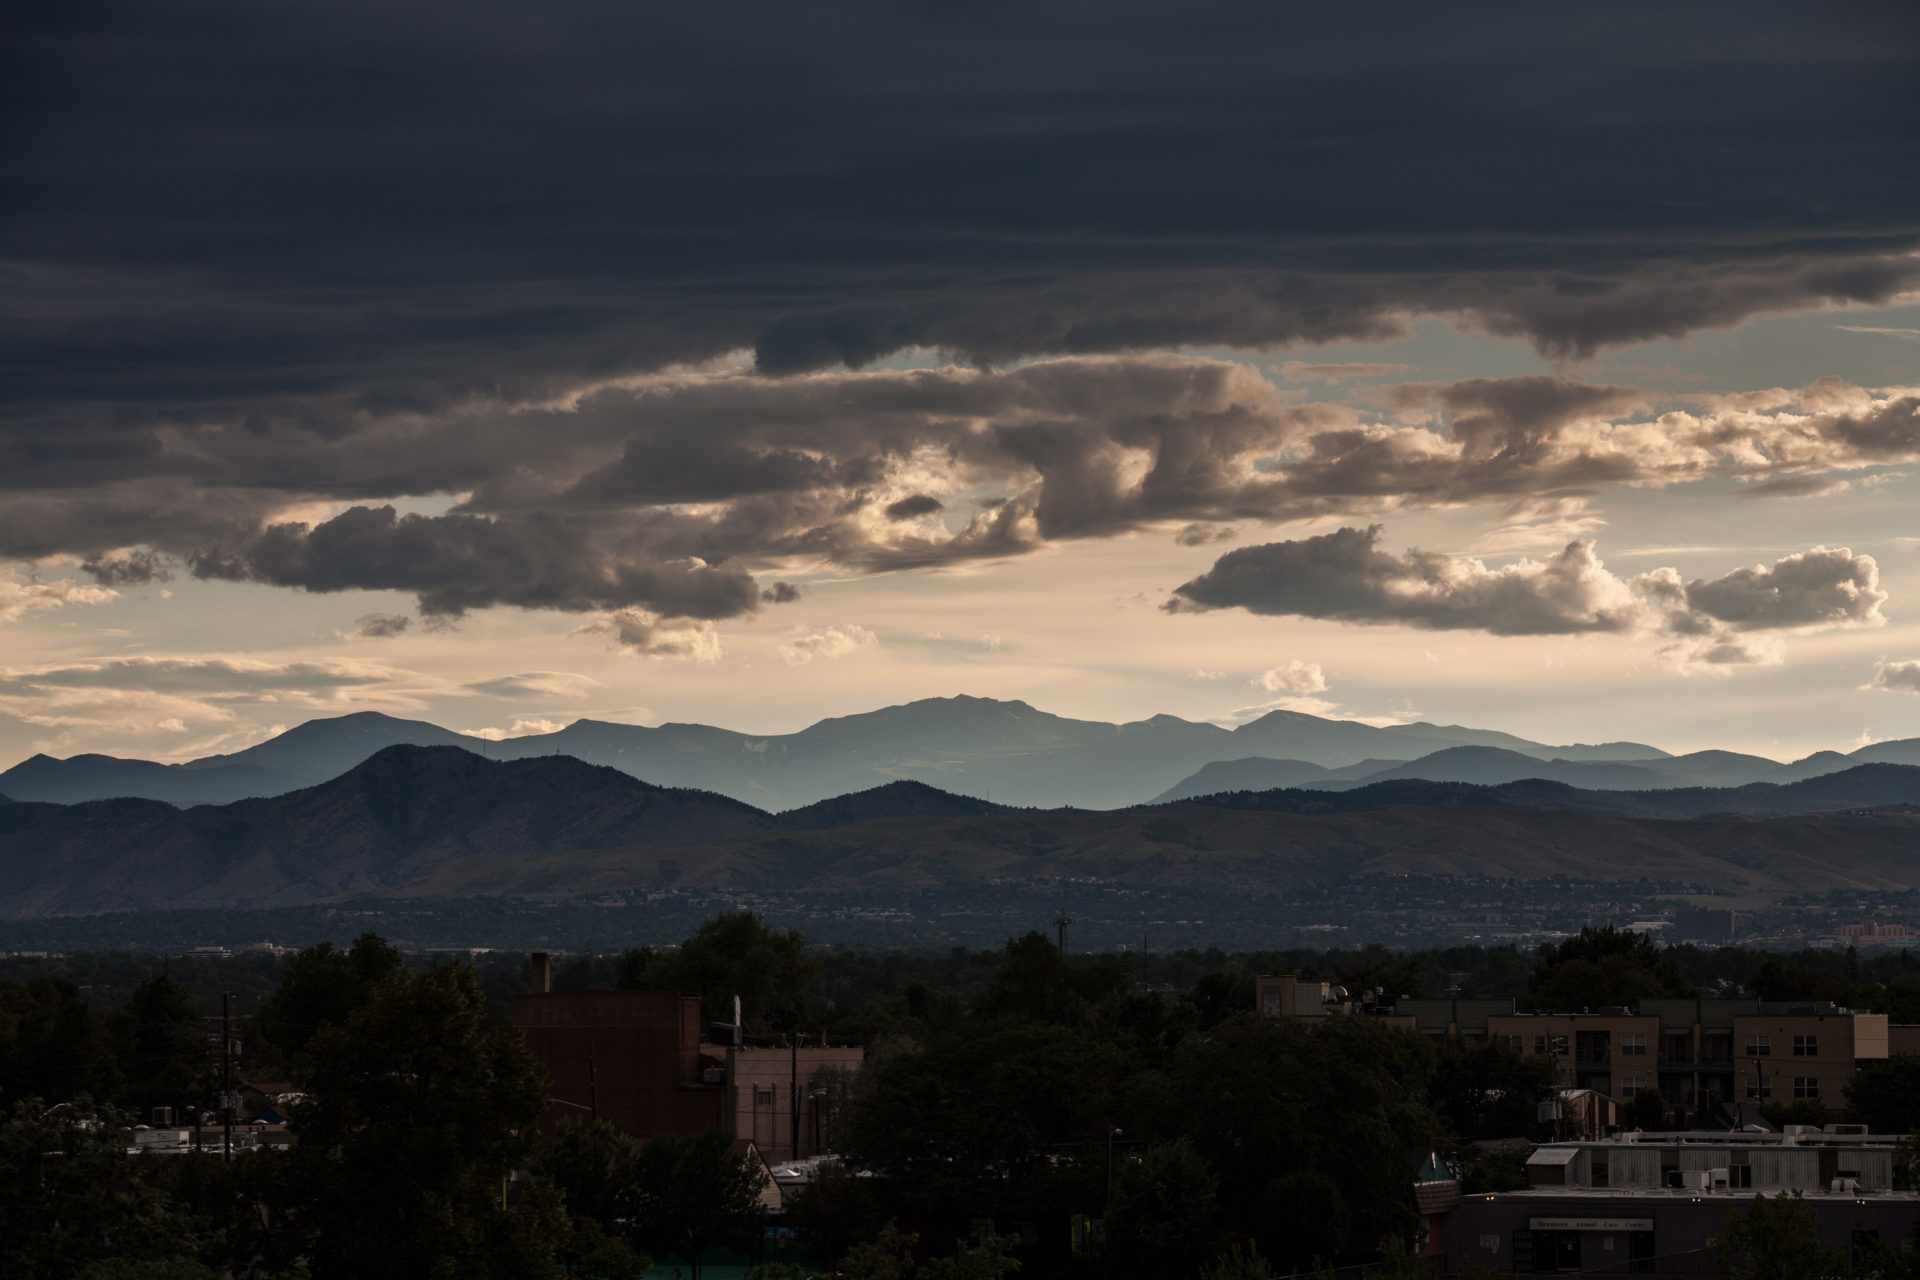 Mount Evans sunset - August 3, 2011